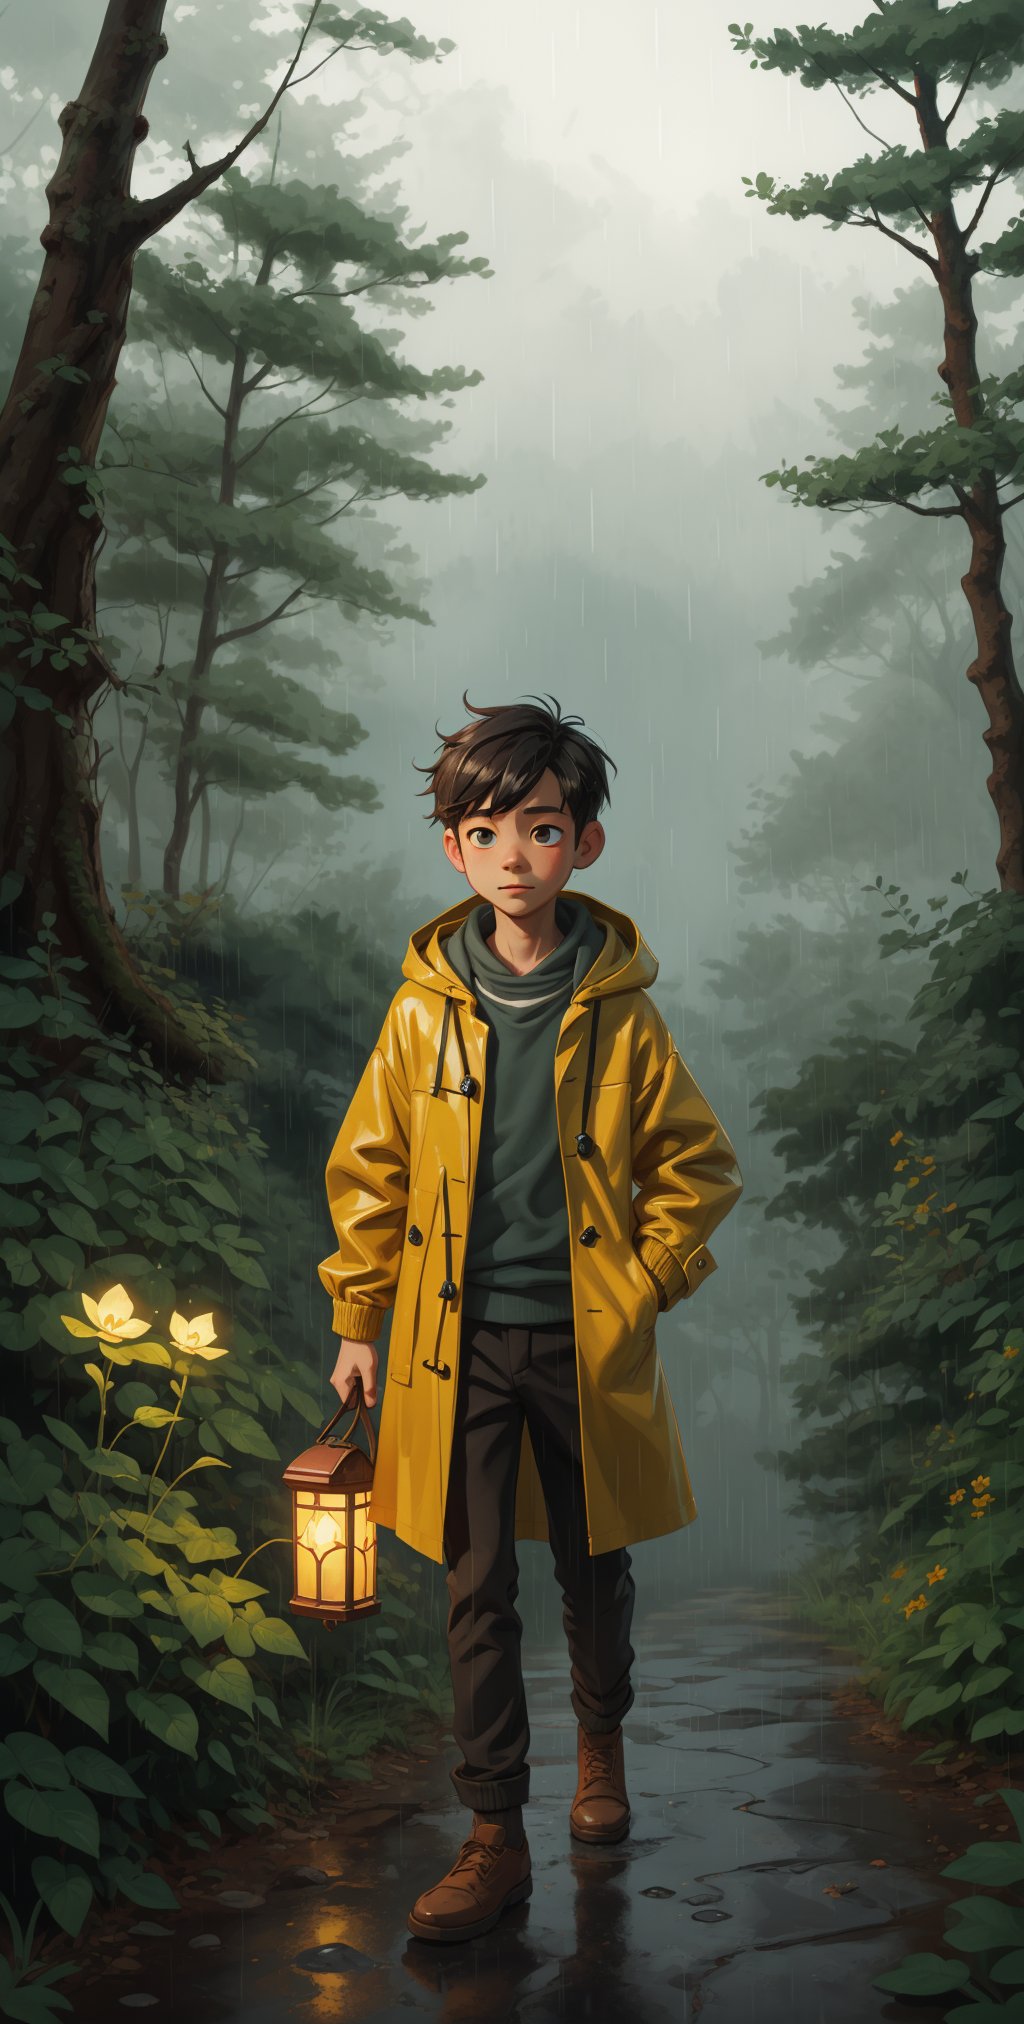 masterpiece,best quality,forest,rain,1boy,yellow raincoat,glow magic,fantasy,,